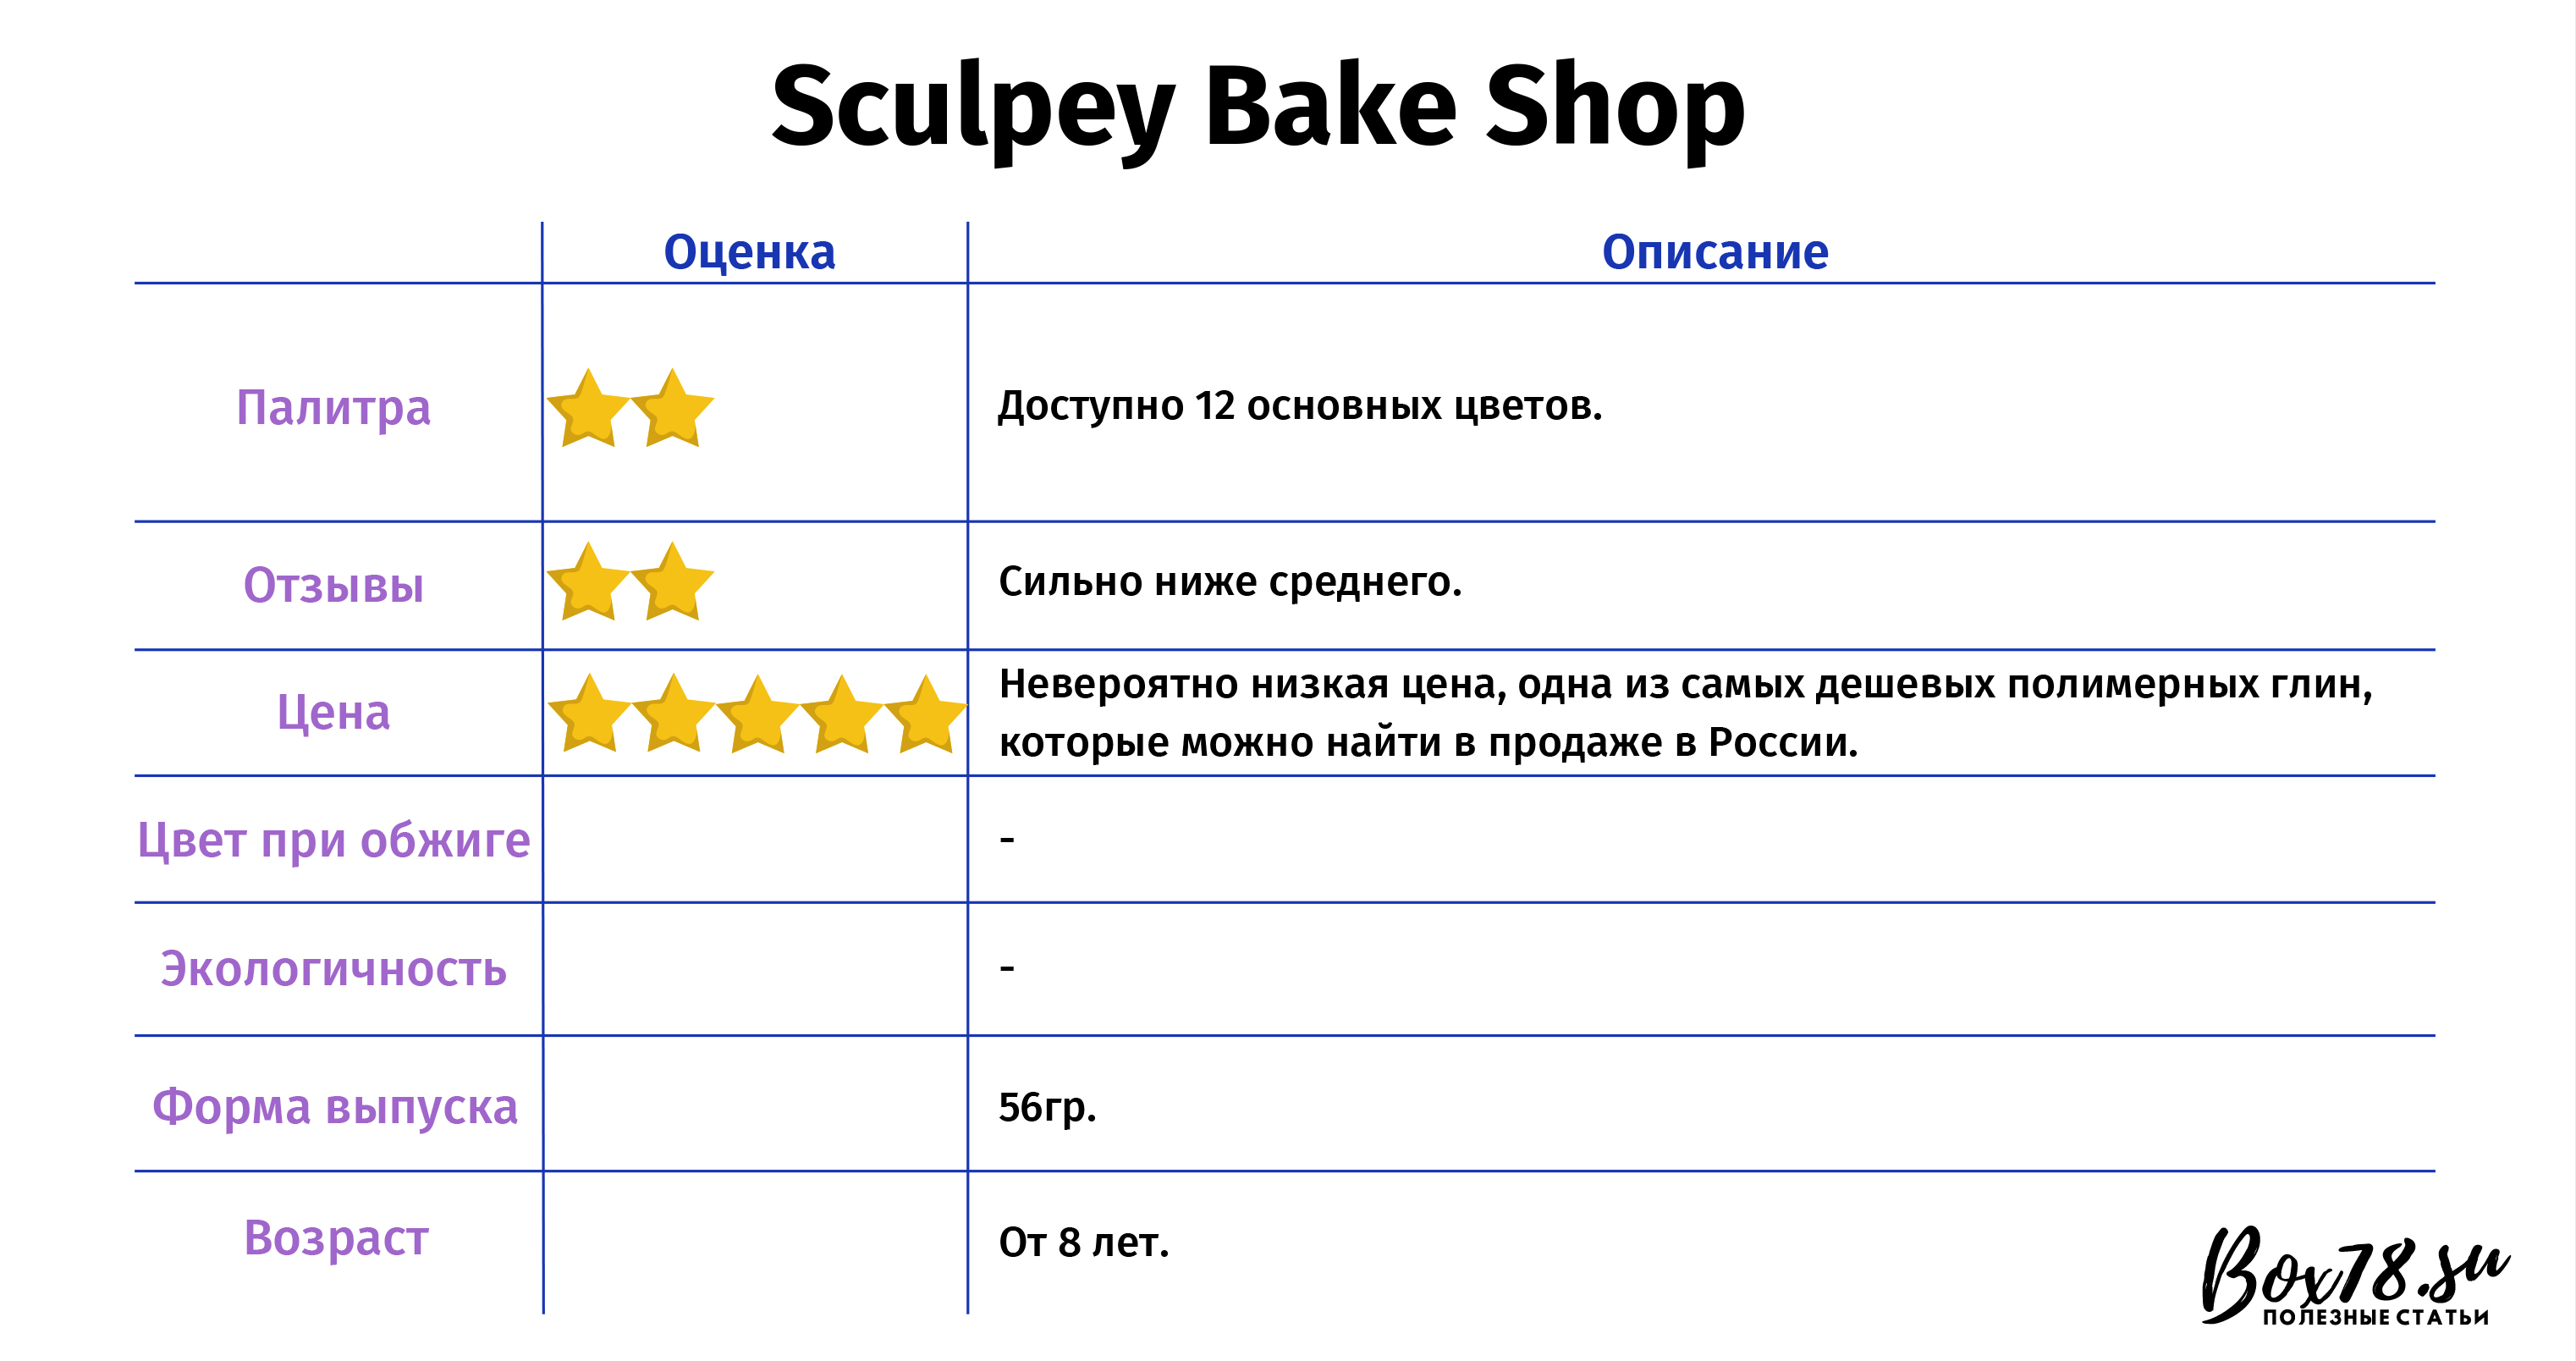 Sculpey Bake Shop.jpg